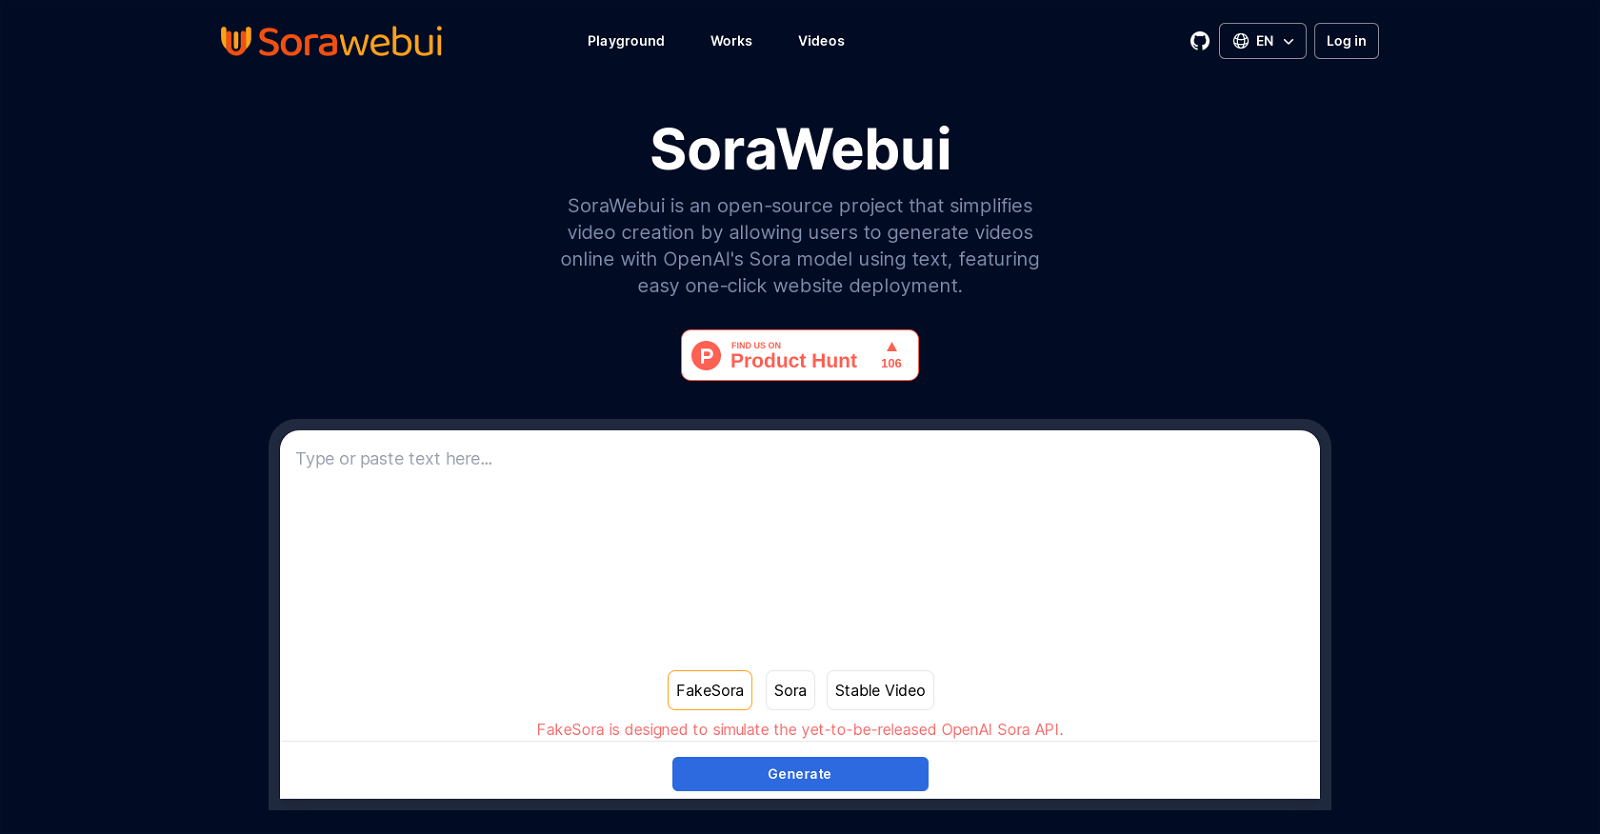 SoraWebui website